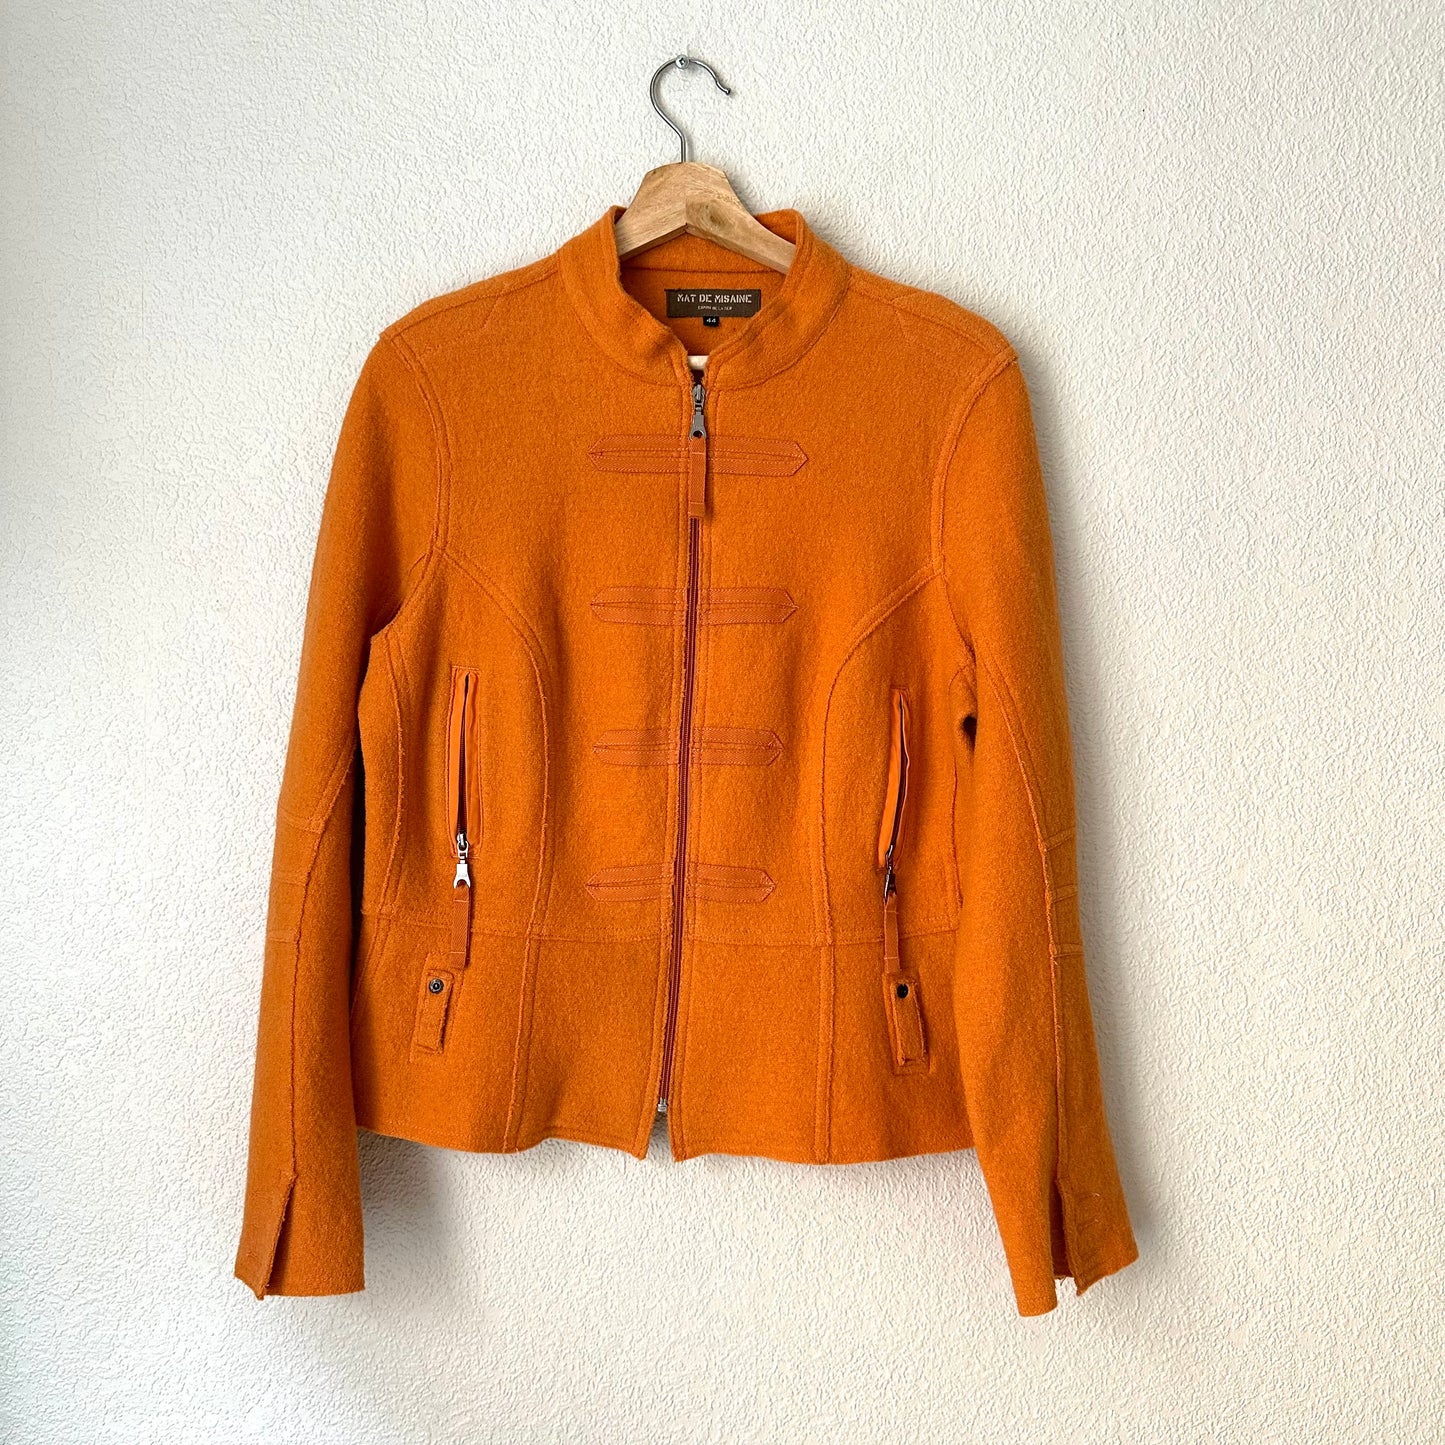 Orange Wool Racer Jacket